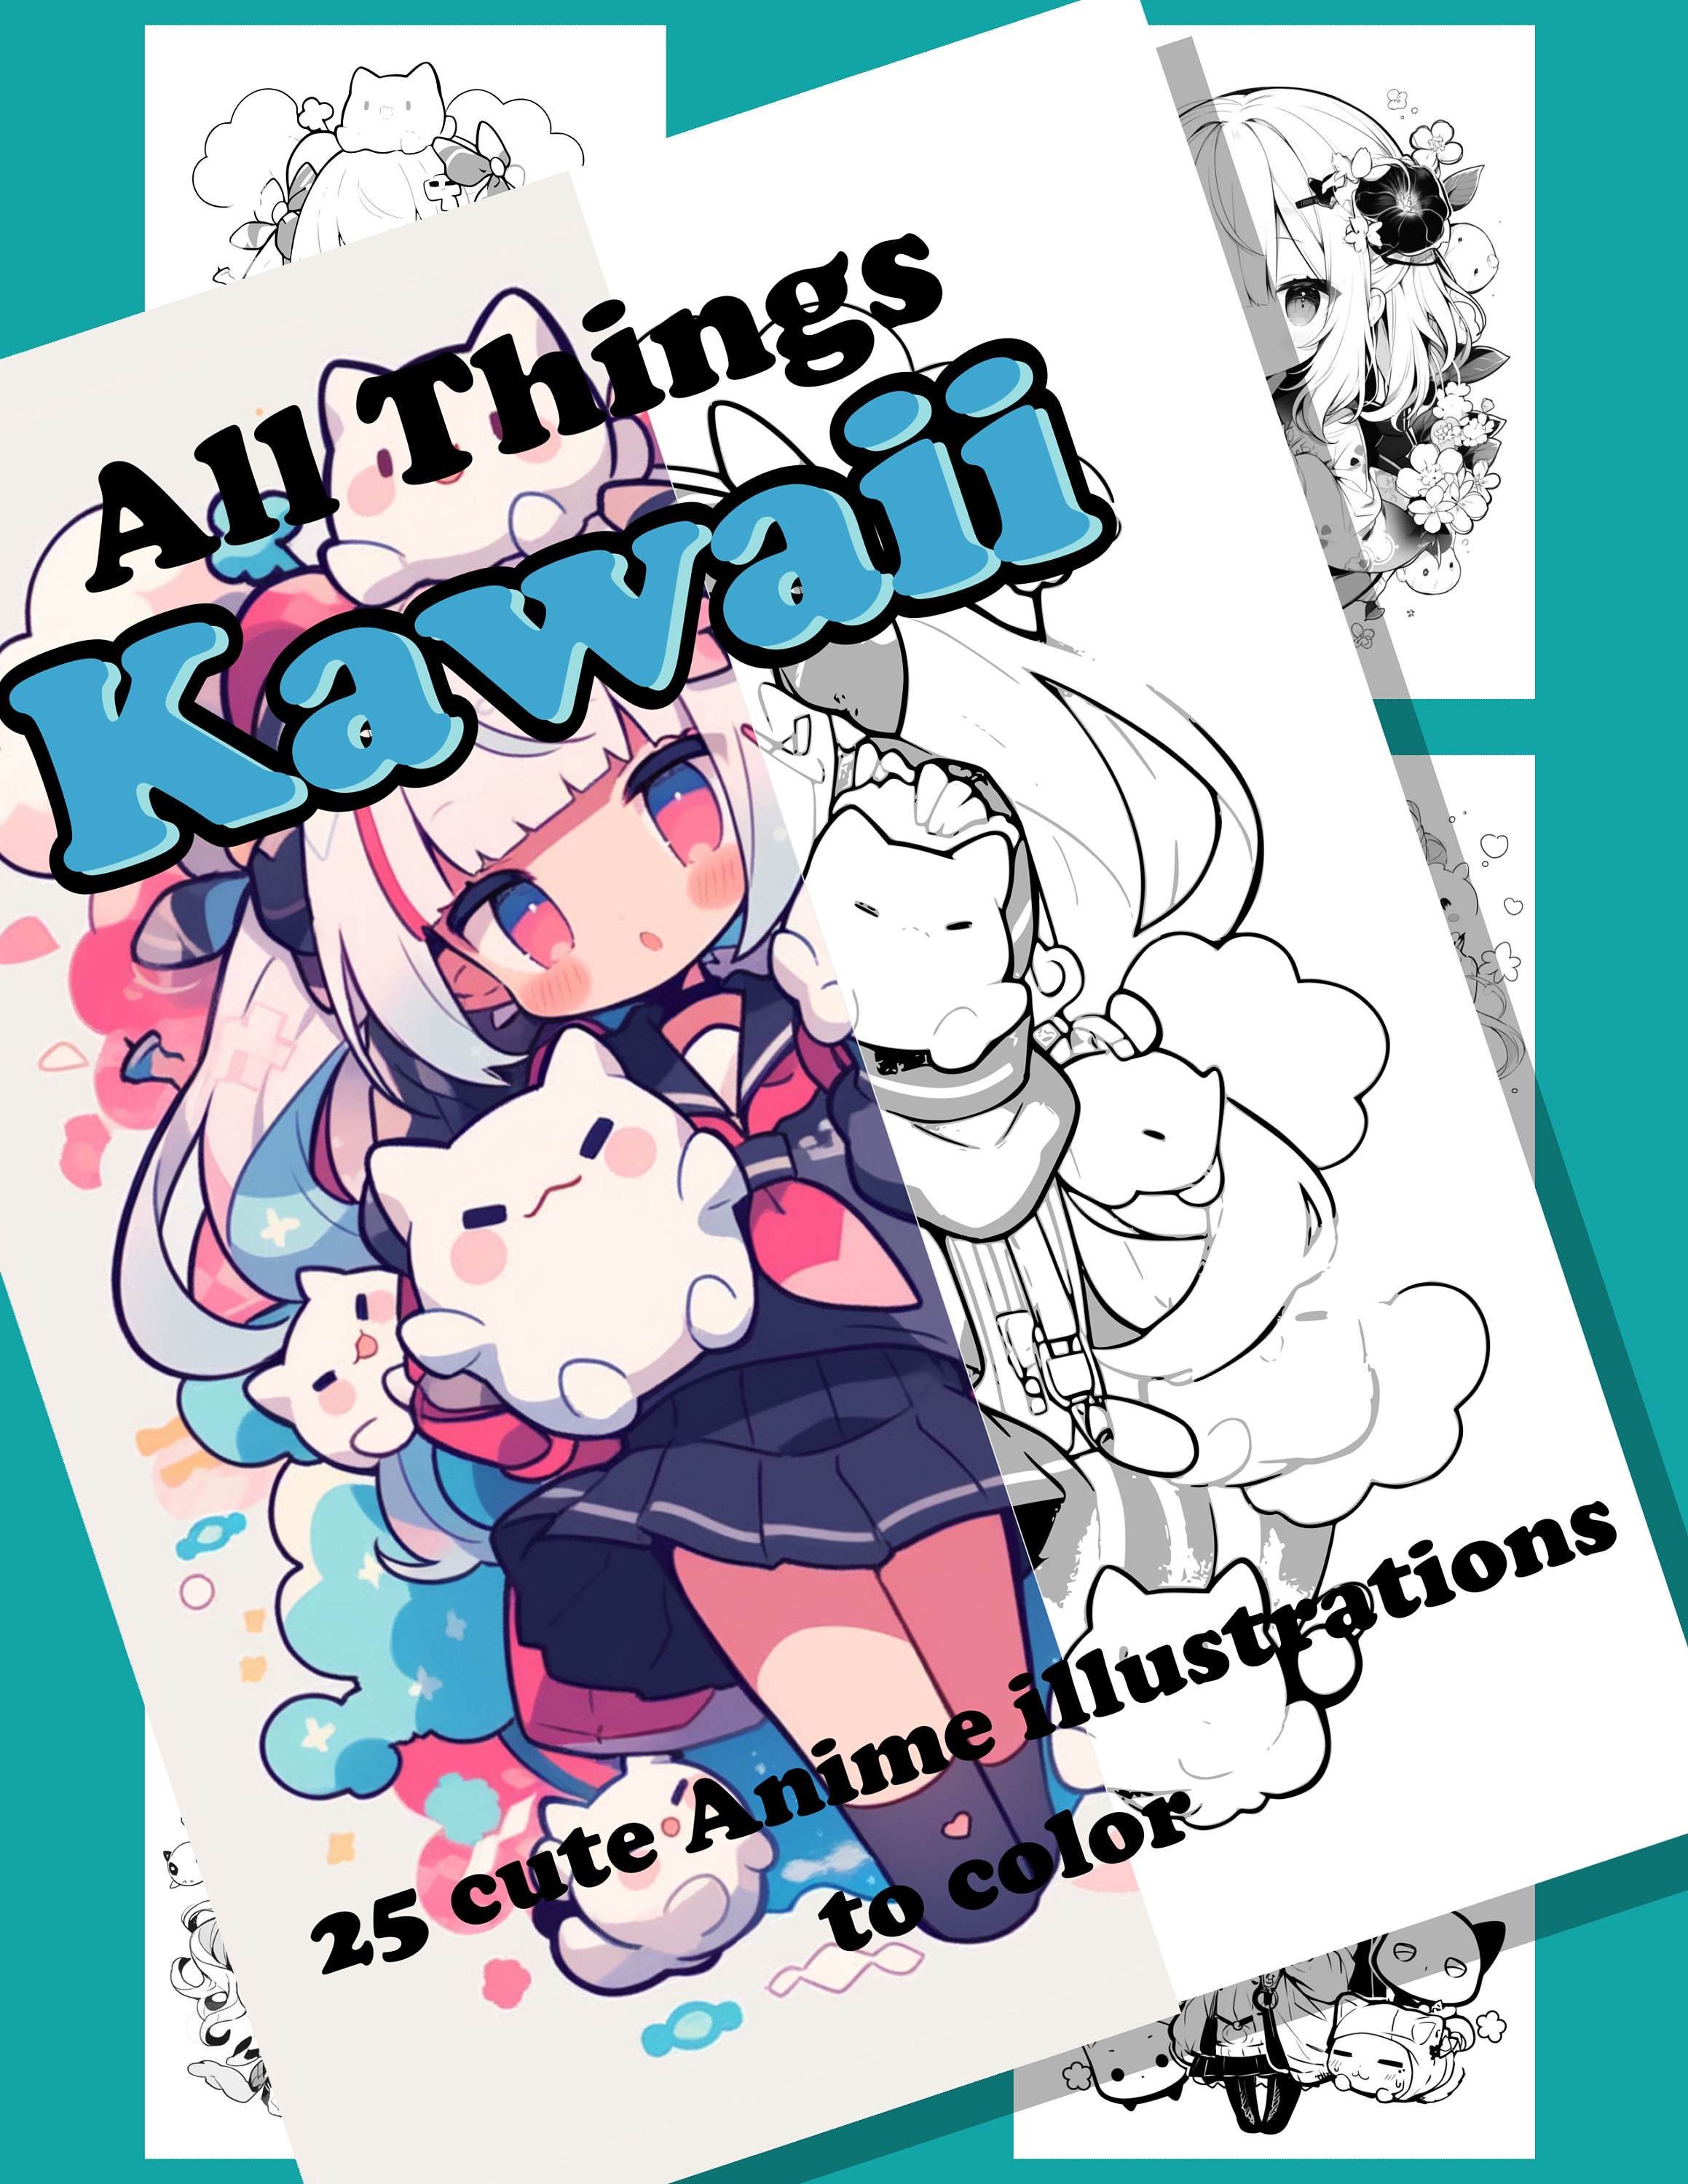 Premium AI Image  kawaii cartoon characters color this a cute coloring page